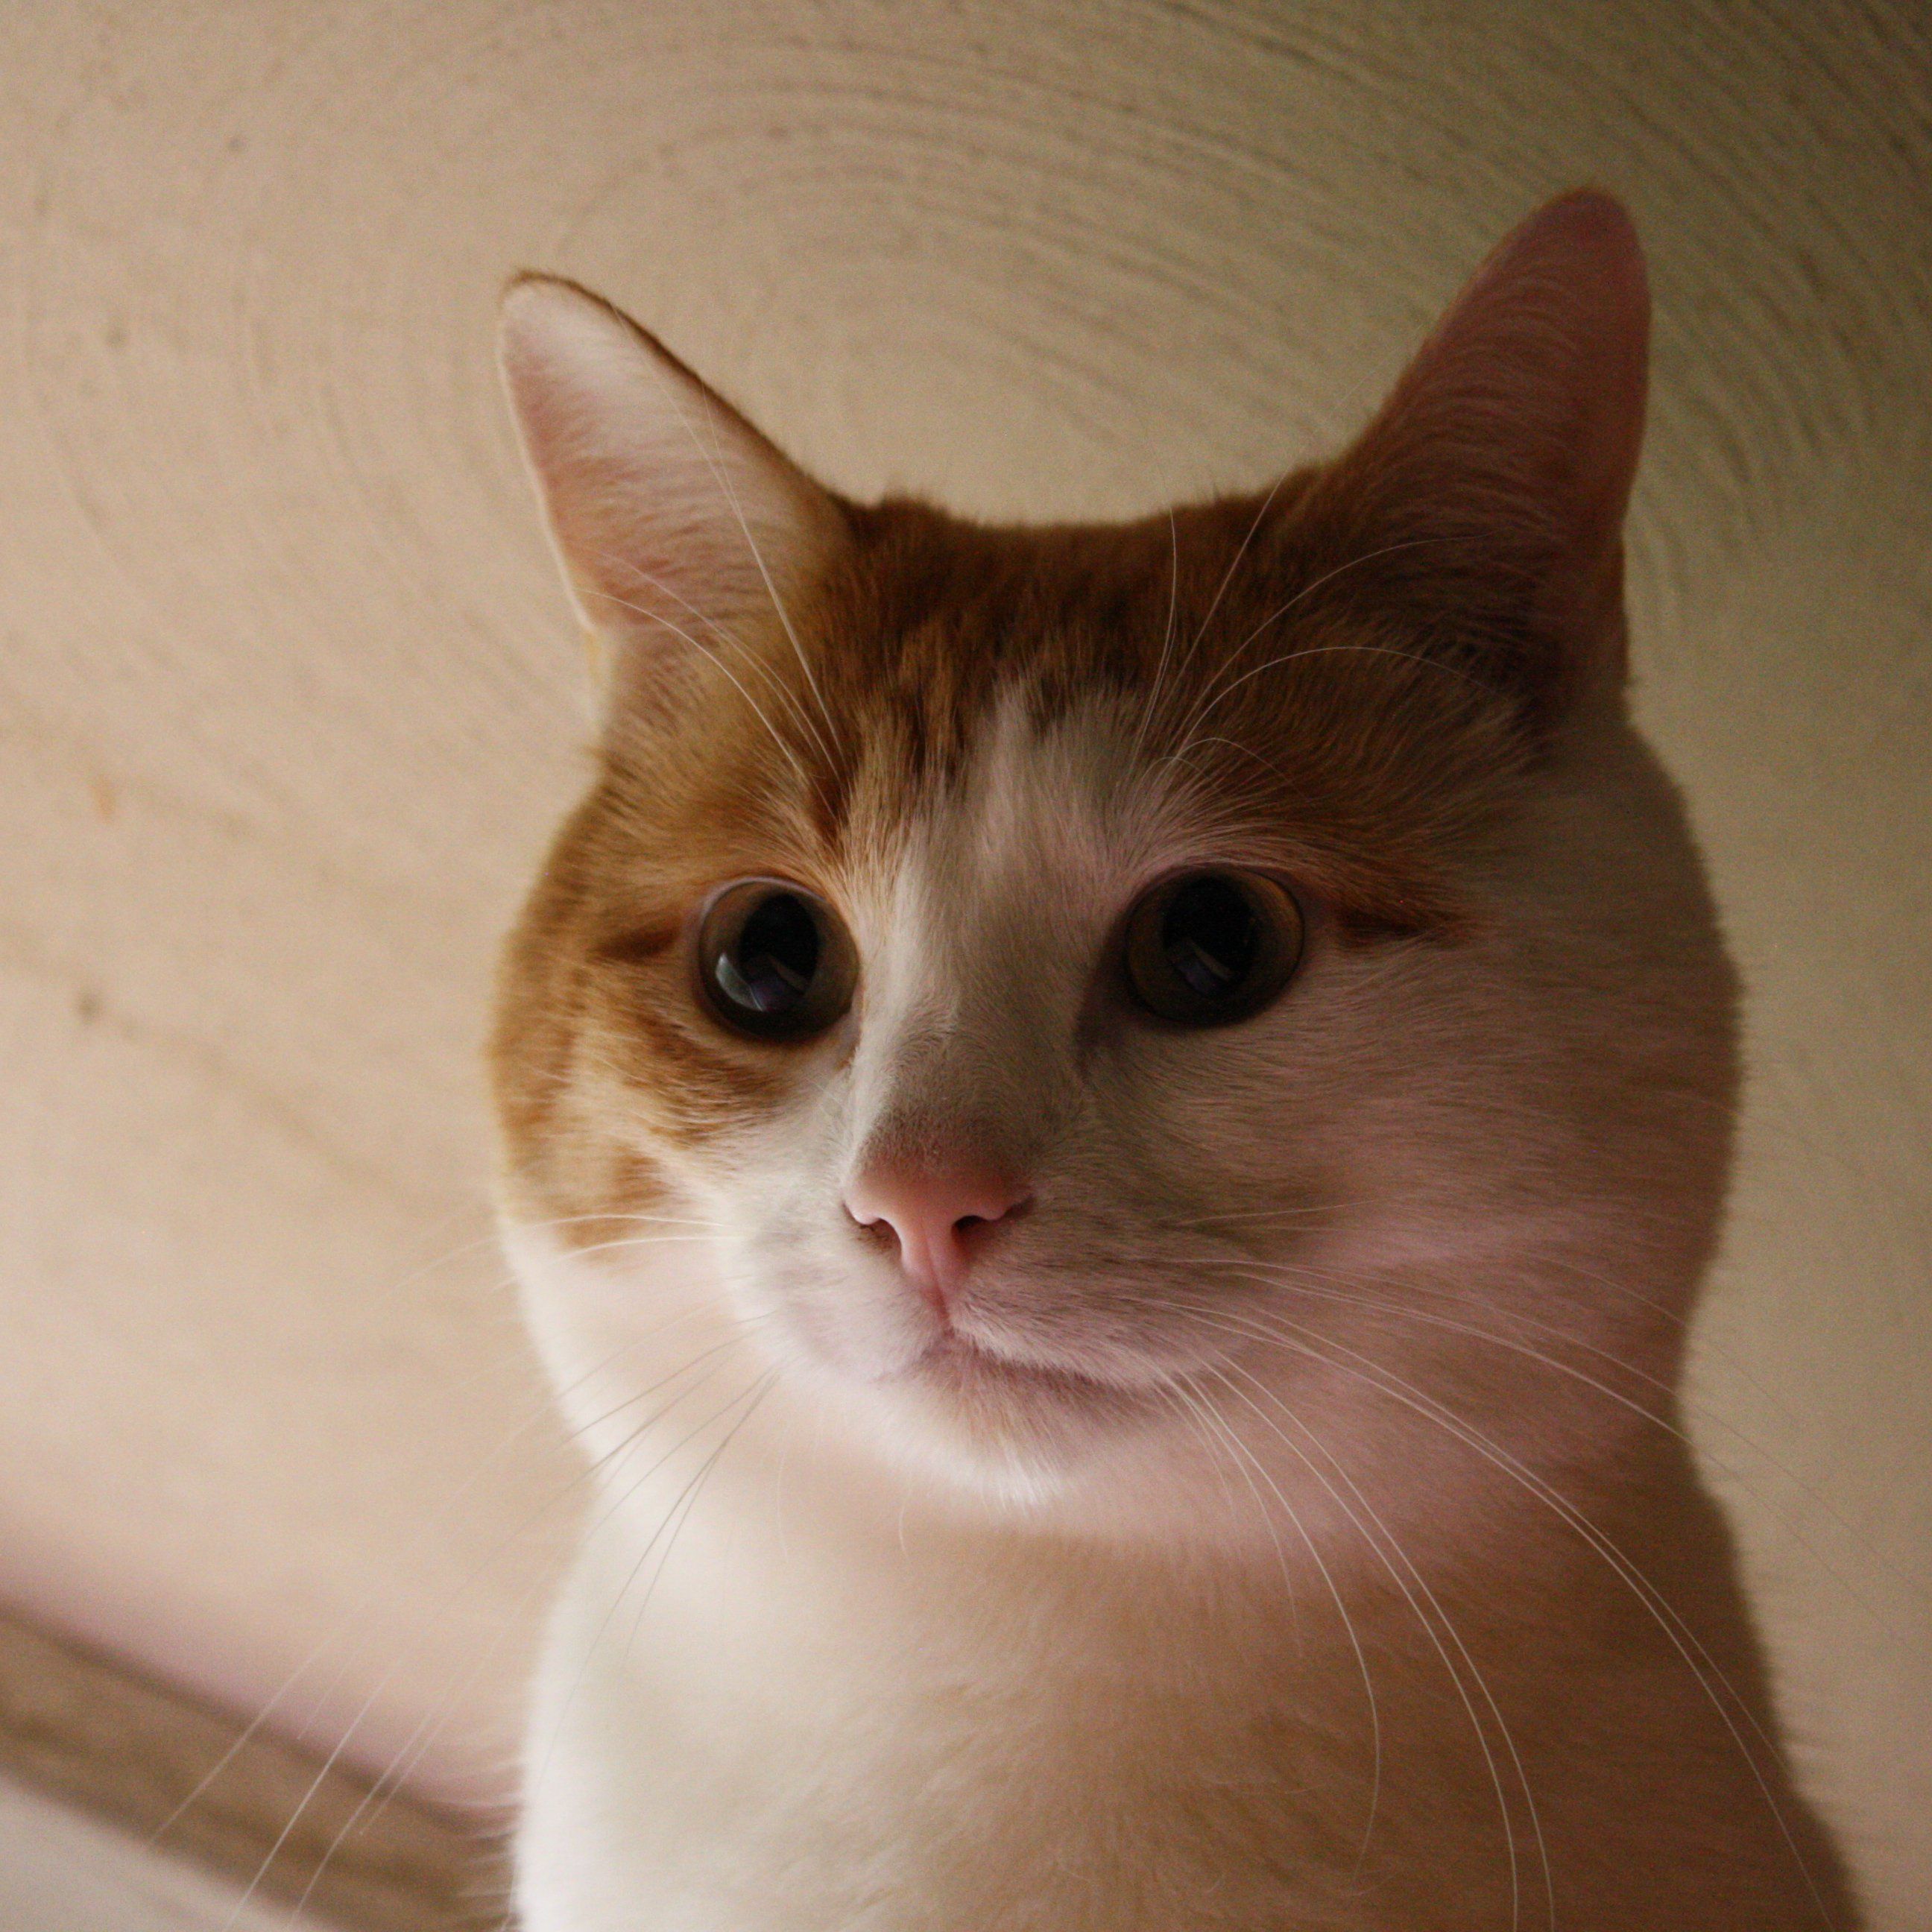 Orange and White Cat Face Close Up Picture. Free Photograph. Photo Public Domain